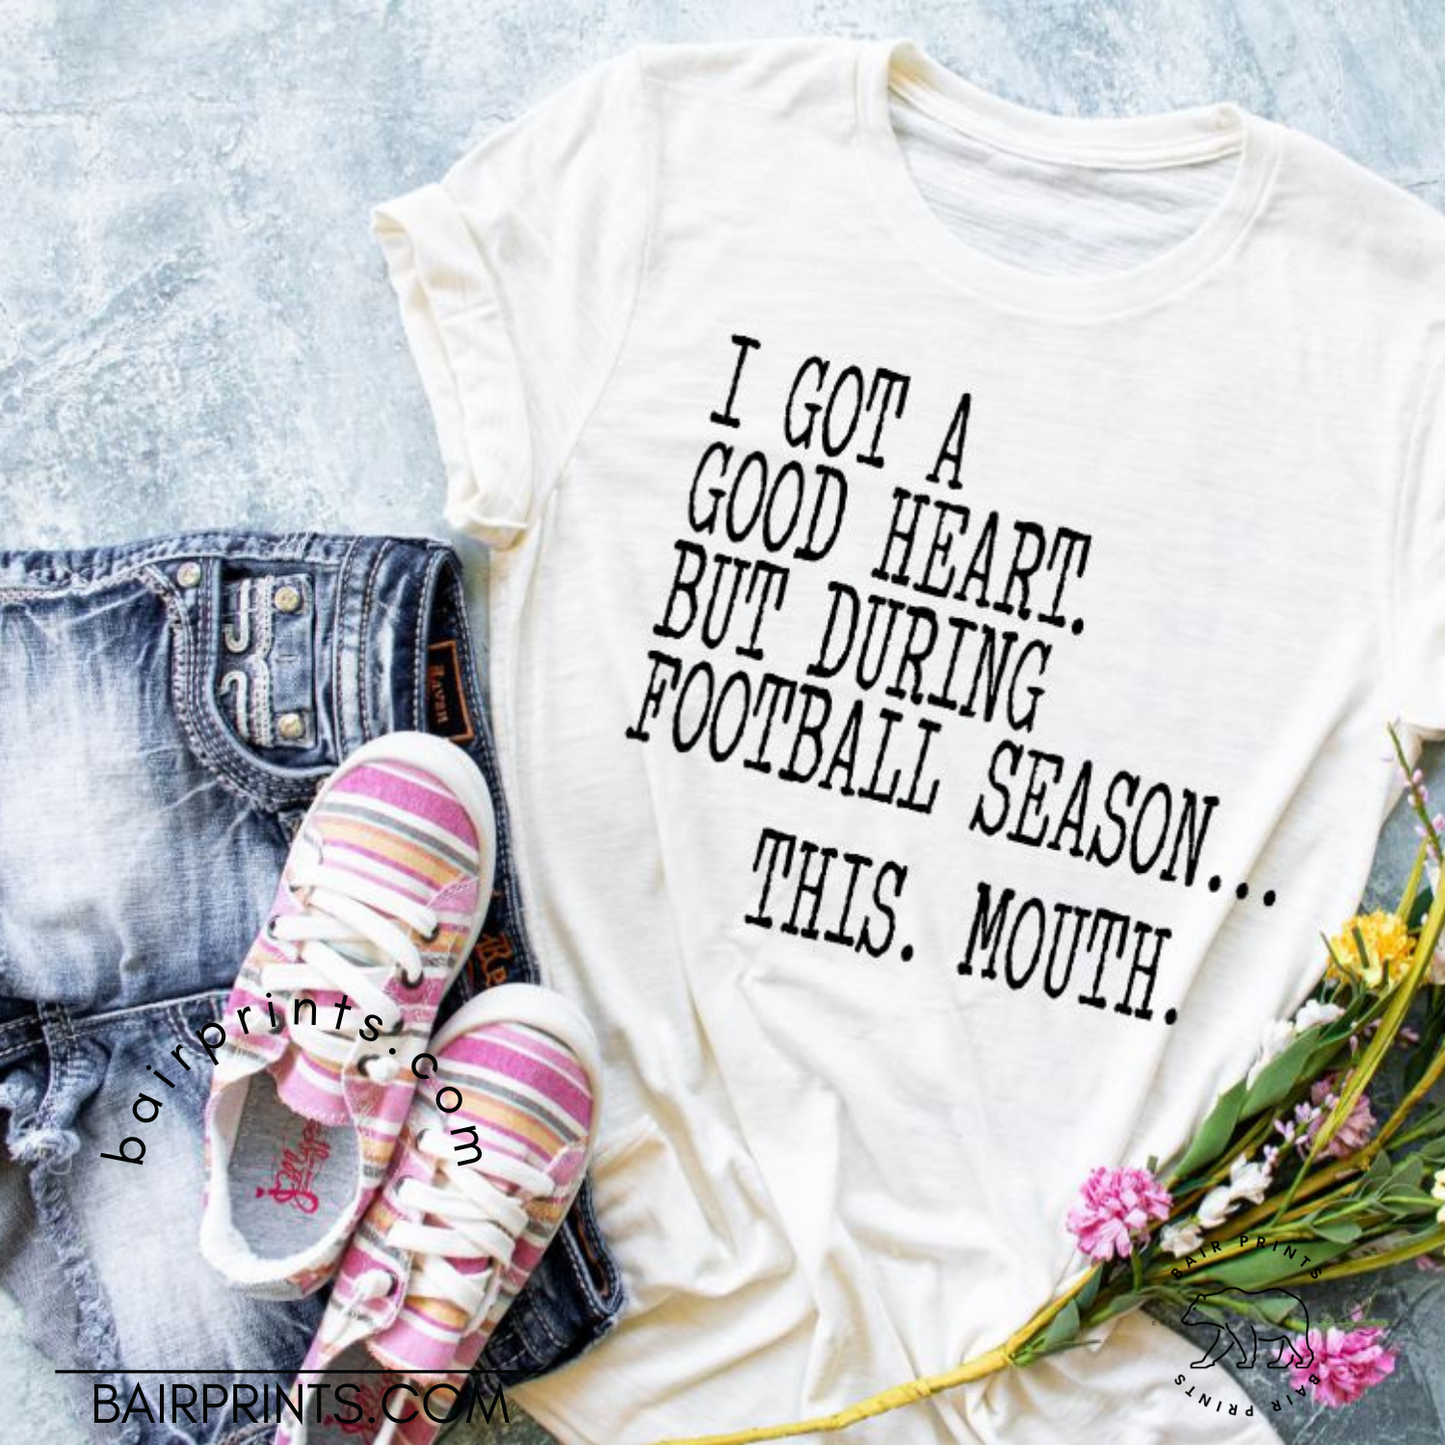 I Got a Good Heart But During Football Season this Mouth T-Shirt